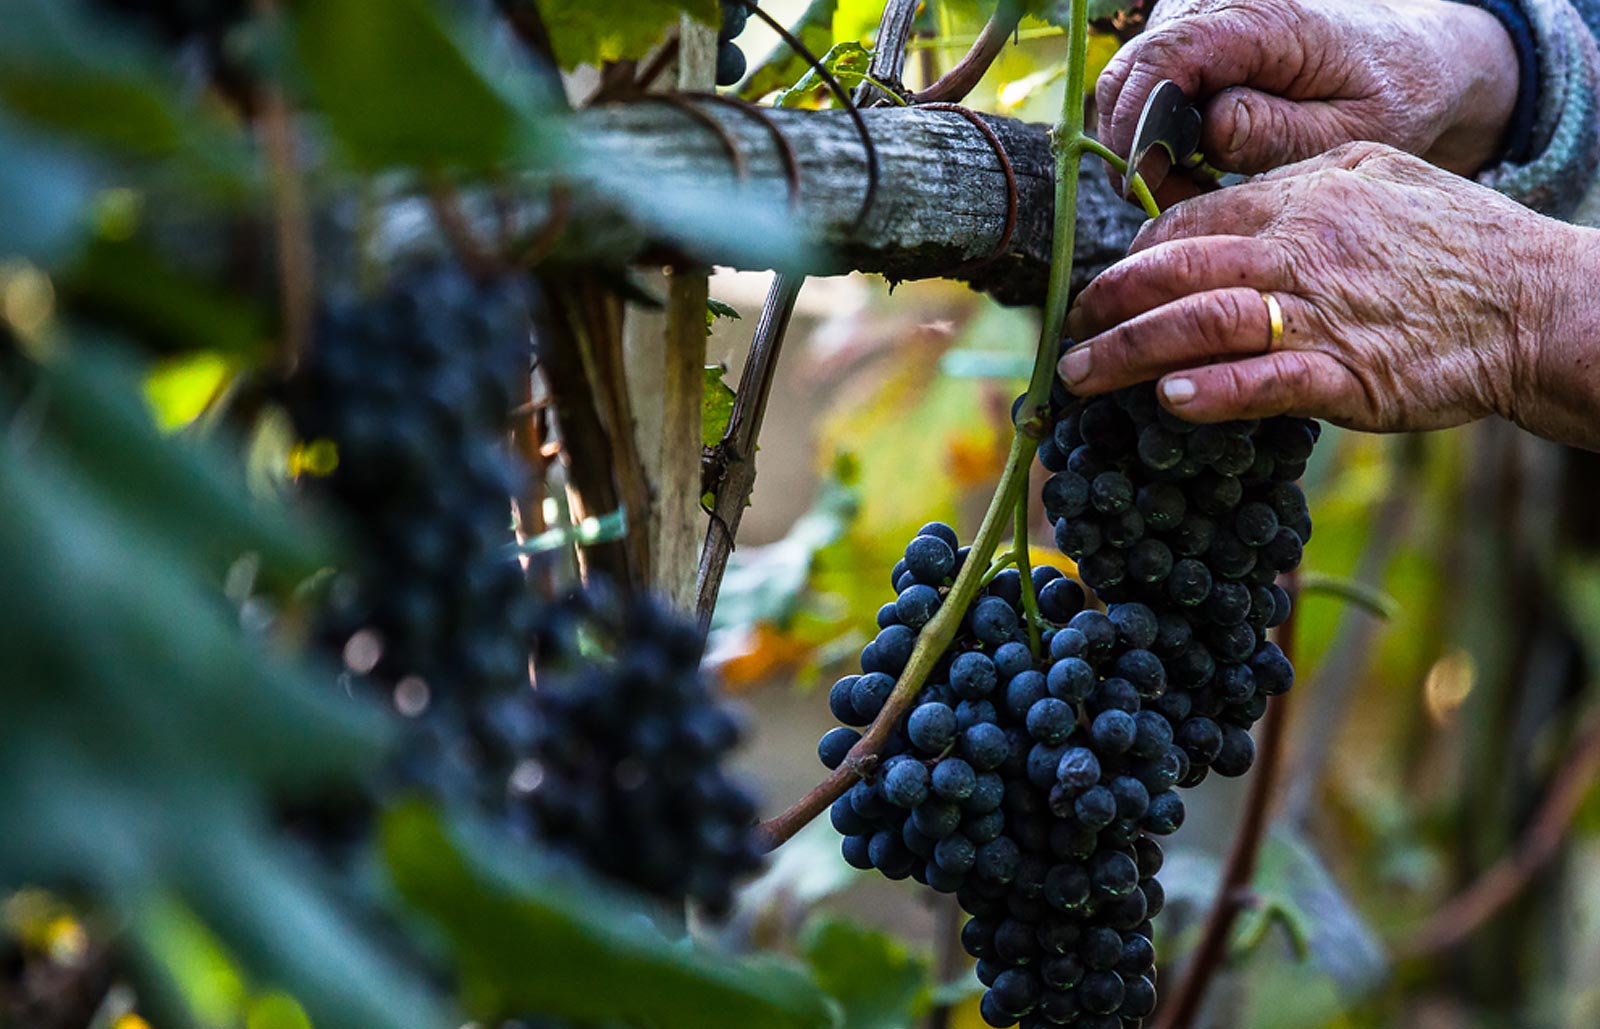 A farmer harvesting grapes in autumn